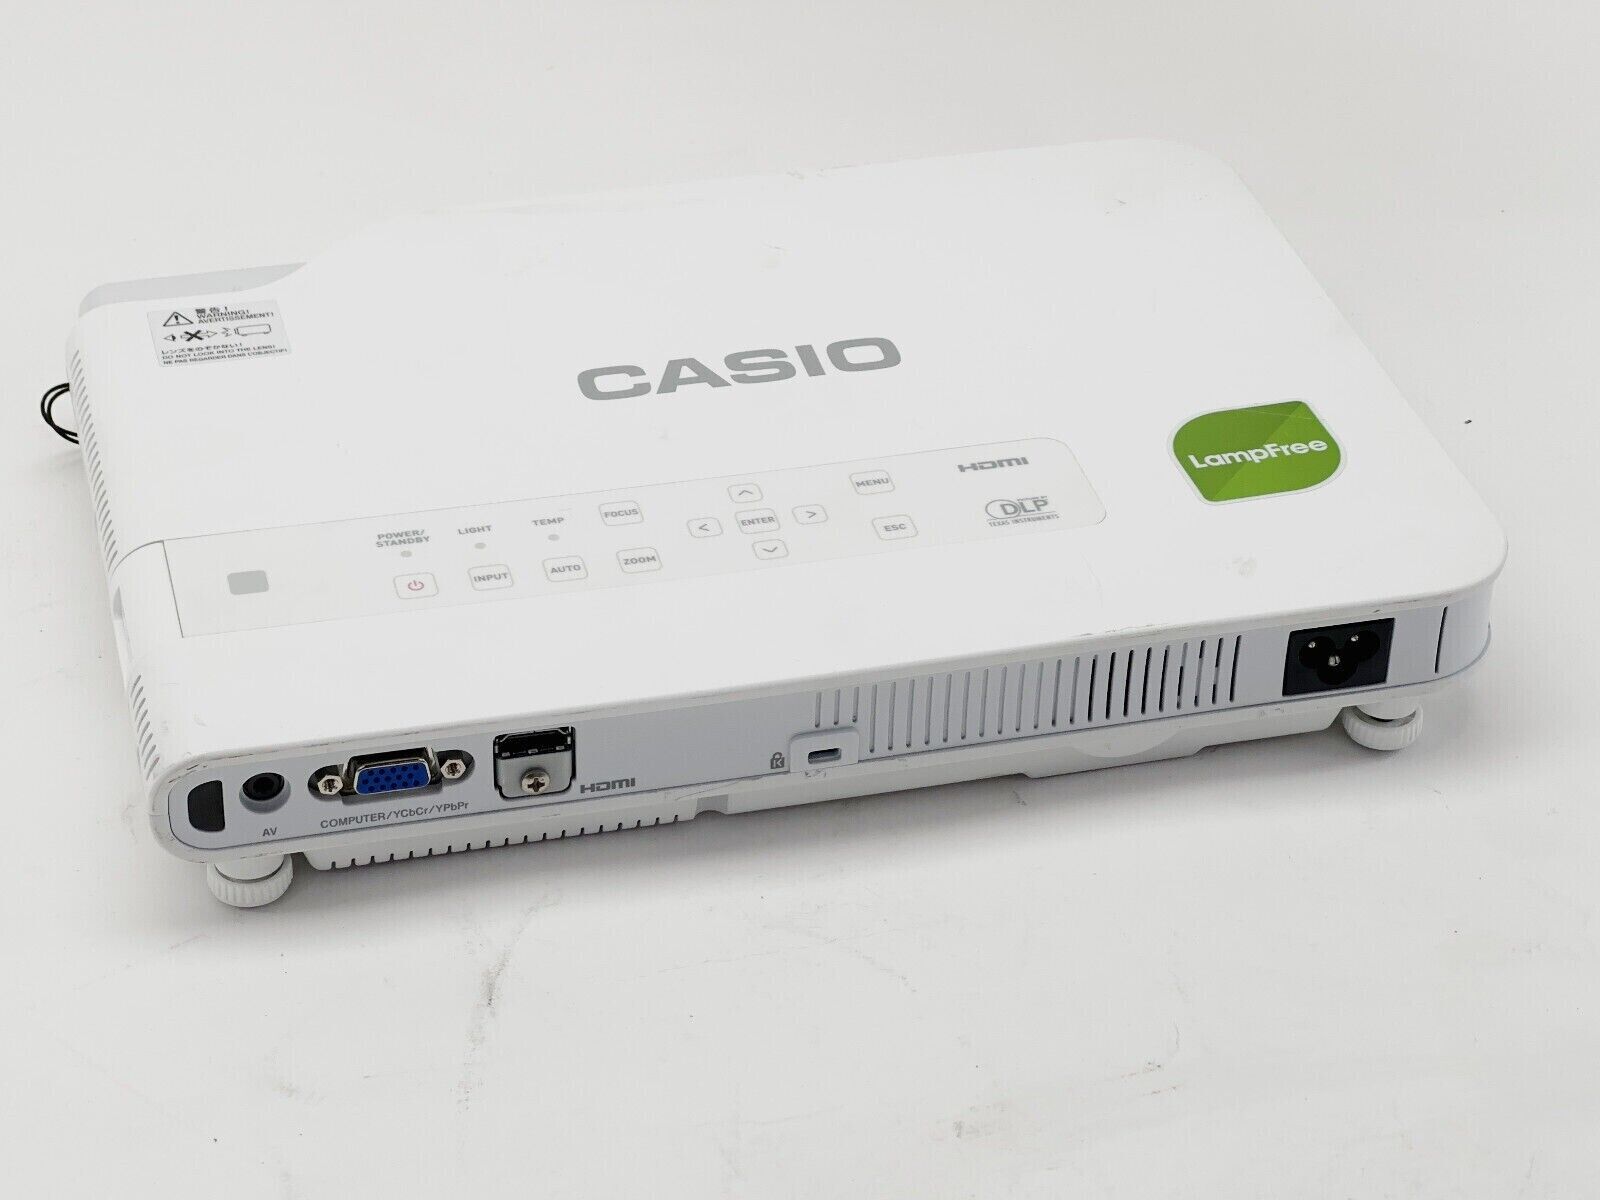 Casio XJ-A142 2500lm DLP XGA Slim Desktop Projector - Sleek White Design